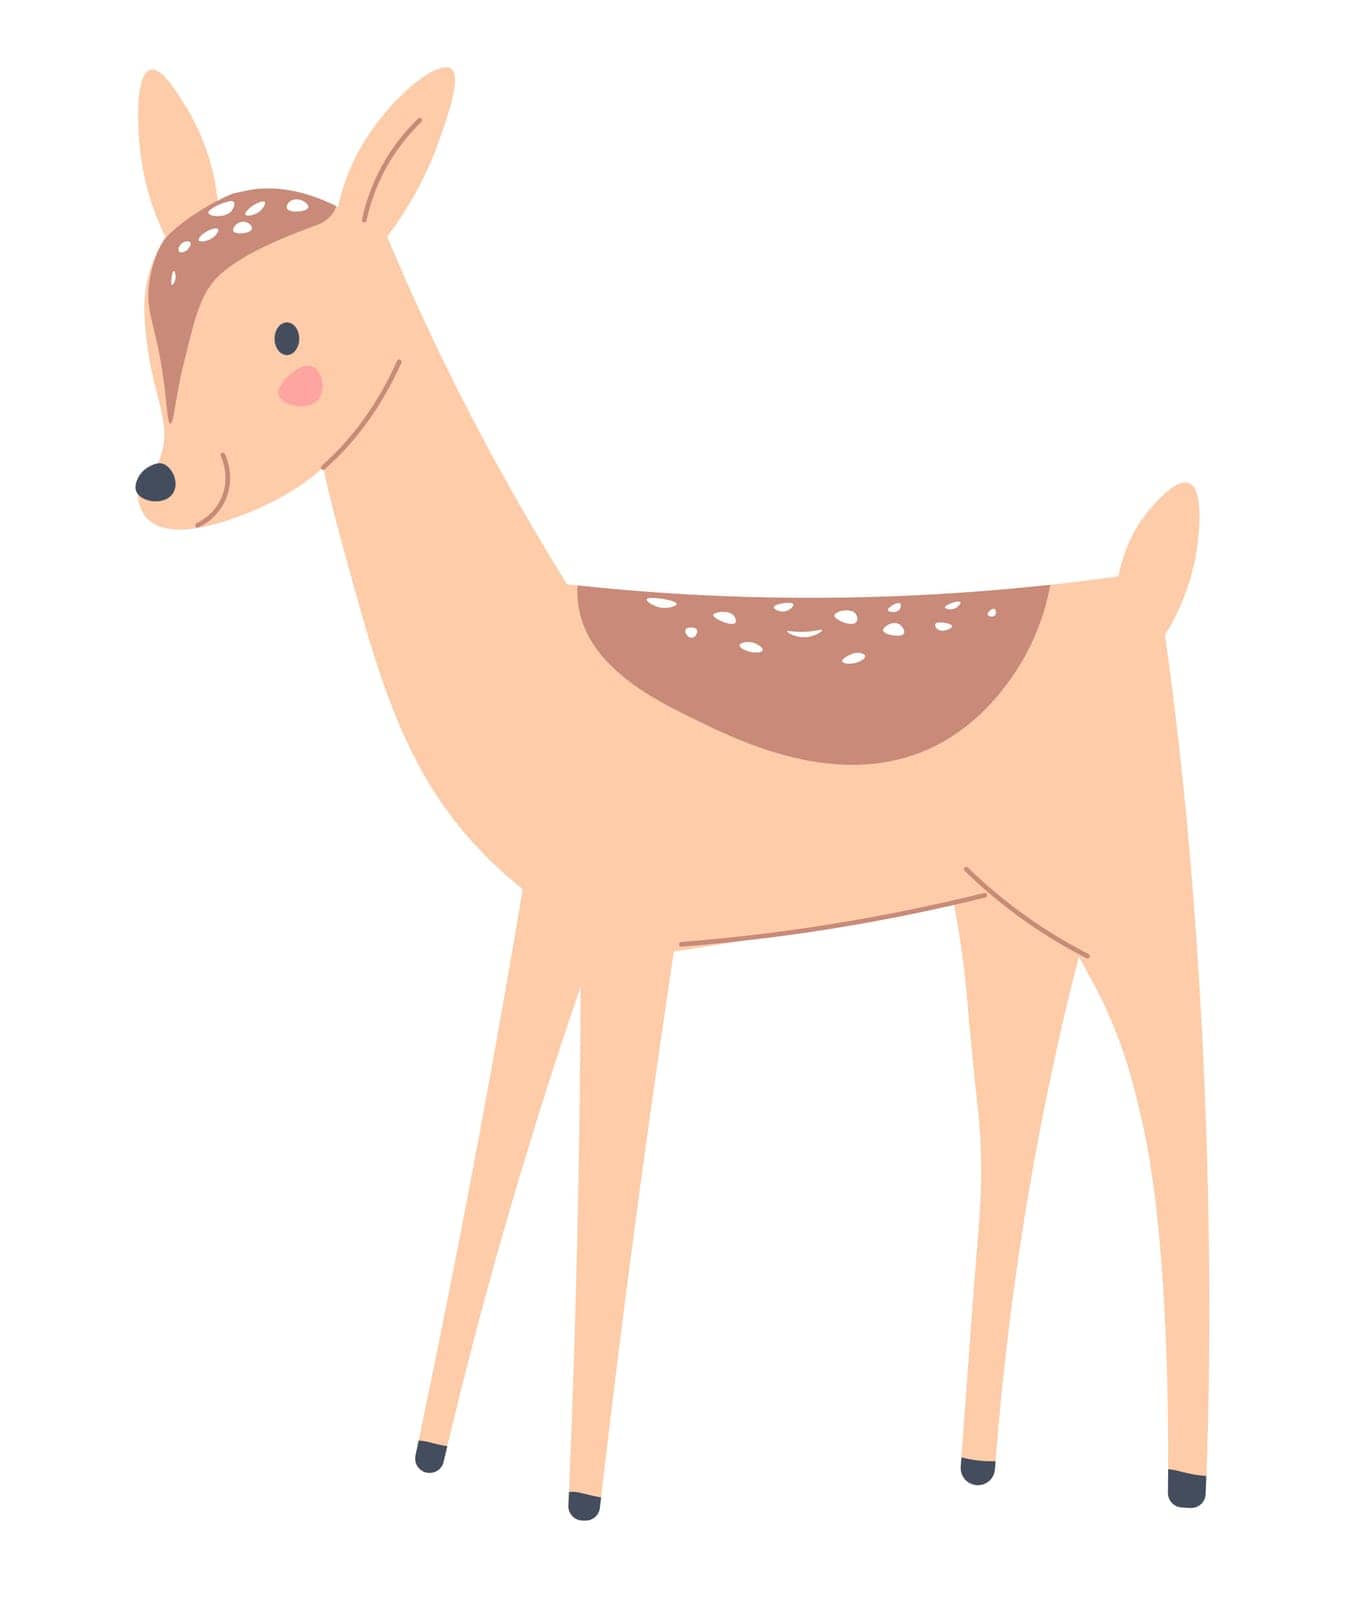 Small deer animal portrait, cute mammal vector by Sonulkaster